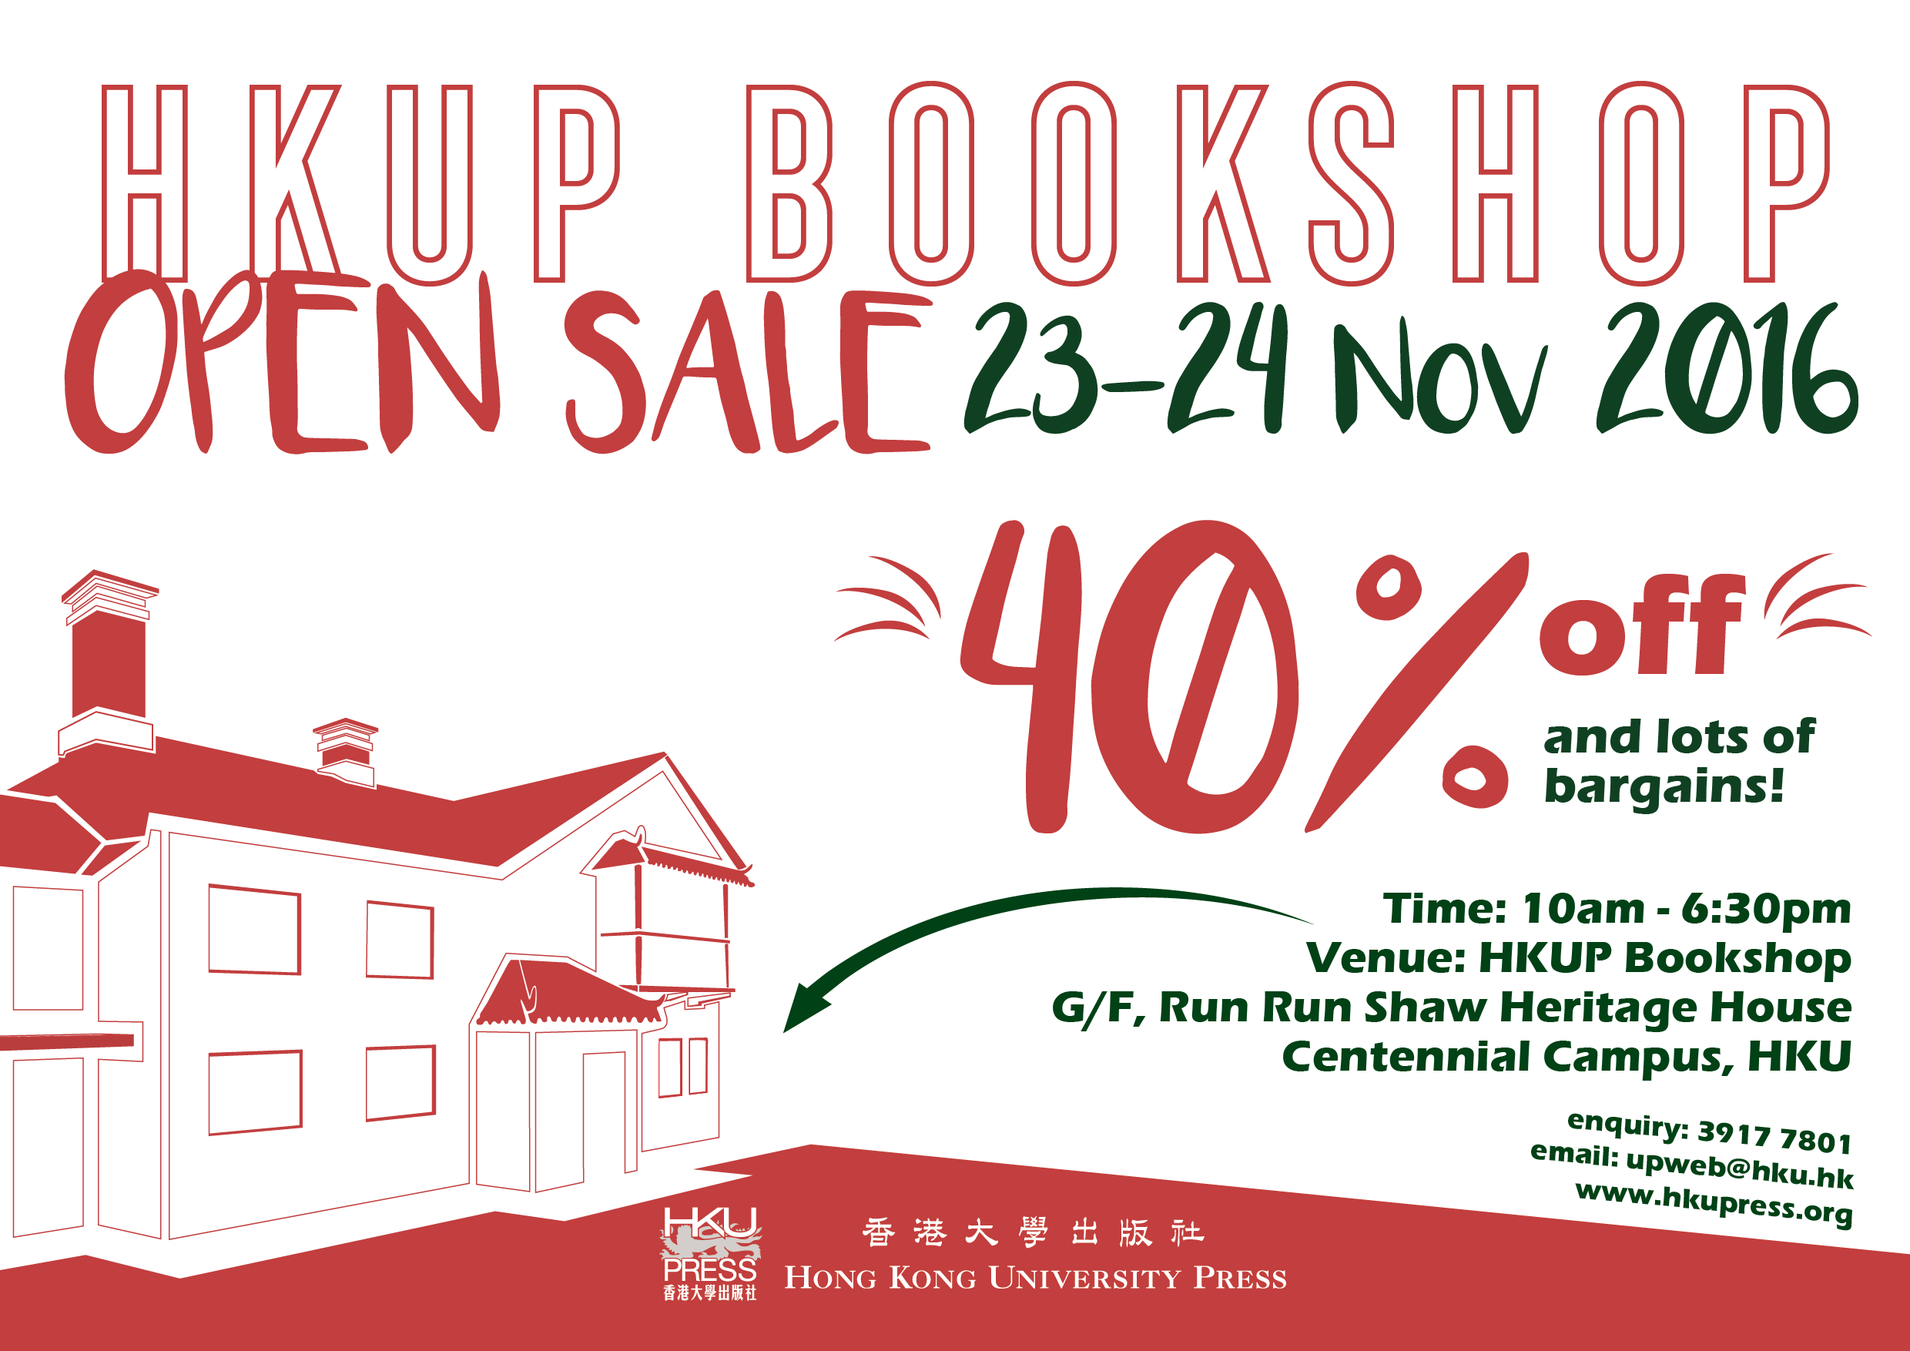 HKUP Bookshop Open Sale! 23-24 Nov 2016!